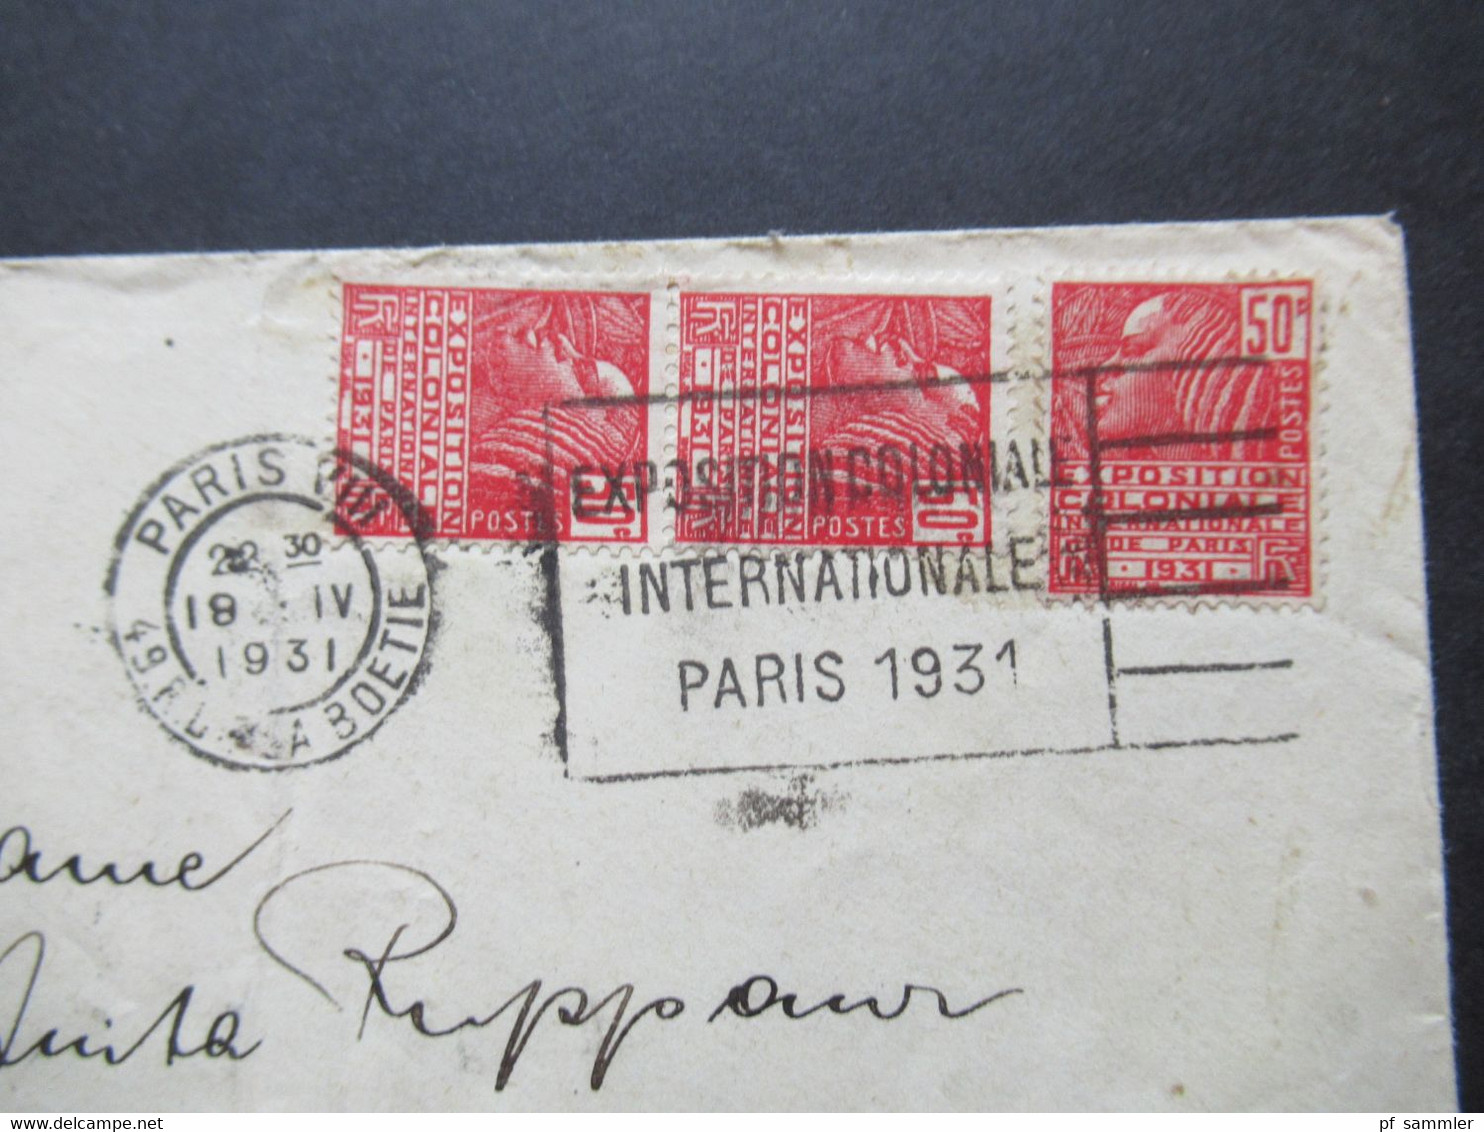 Frankreich 1930 / 31 Internationale Kolonialausstellung Nr. 259 (3) MiF Umschlag Krone La Royale Paris Nach München - Covers & Documents